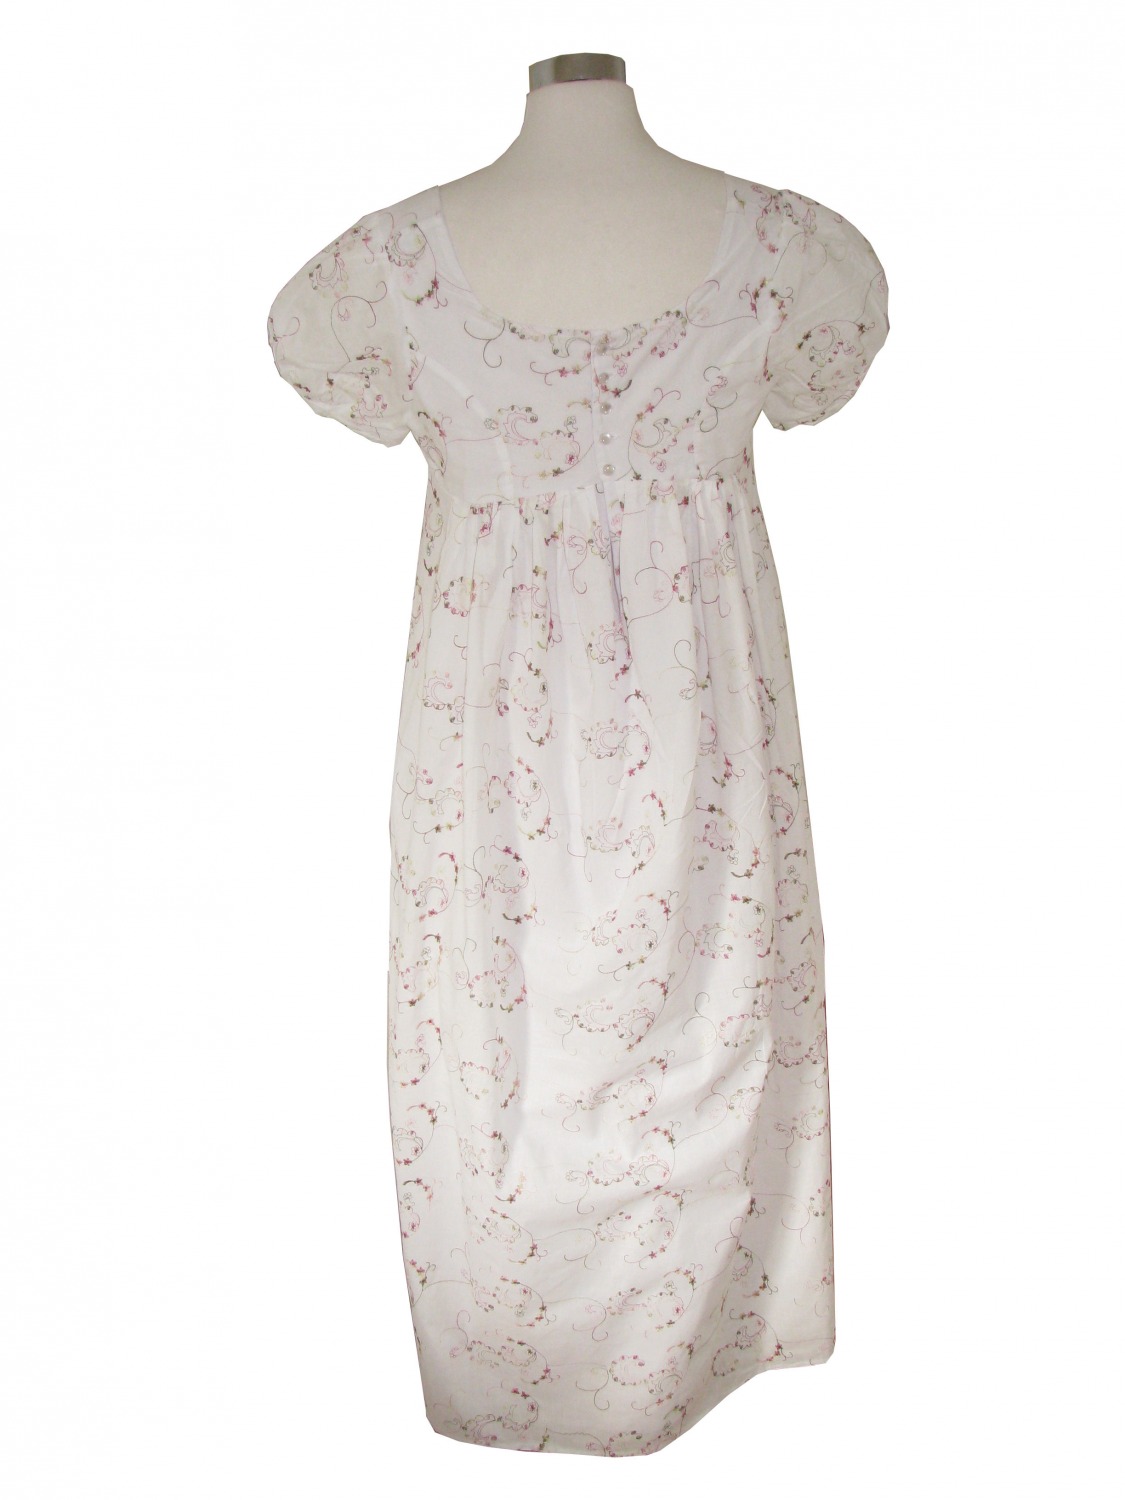 Ladies 18th 19th Century Regency Jane Austen Costume Size 14 - 16 Image